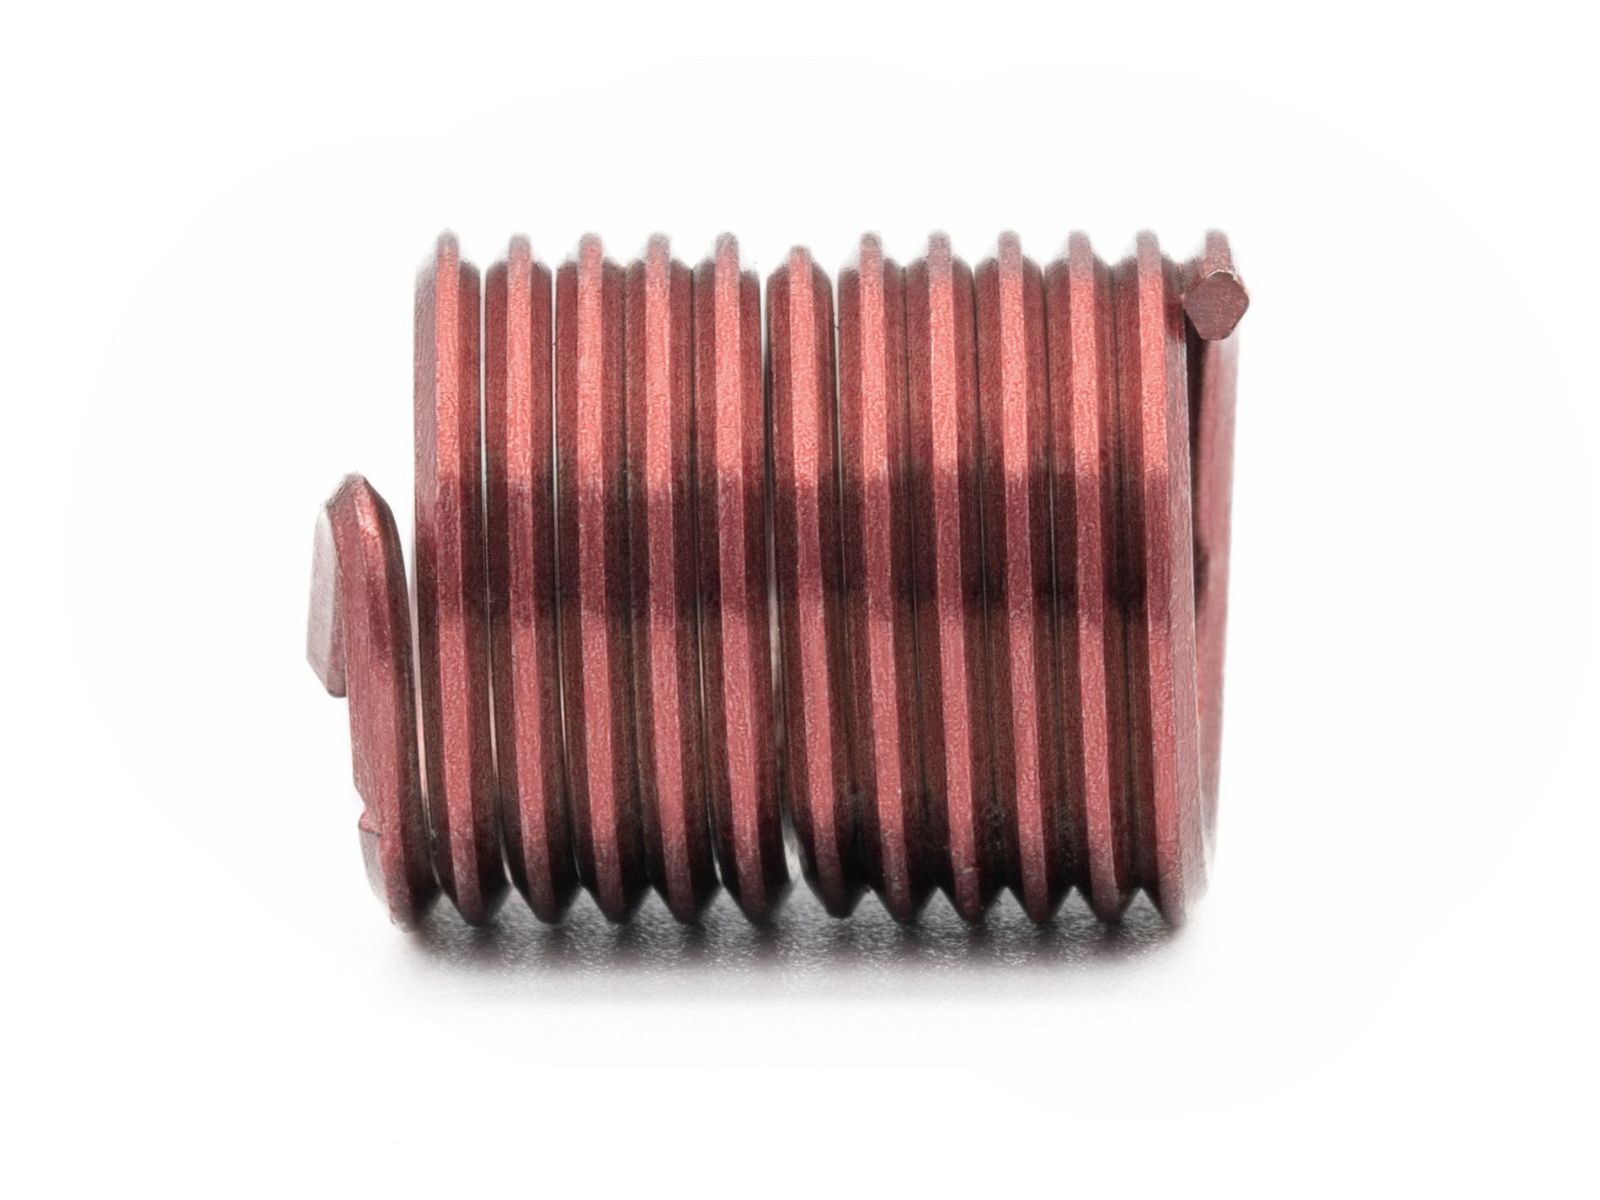 BaerCoil Drahtgewindeeinsätze M 6 x 1,0 - 2,0 D (12 mm) - screw grip (schraubensichernd) - 10 Stk.